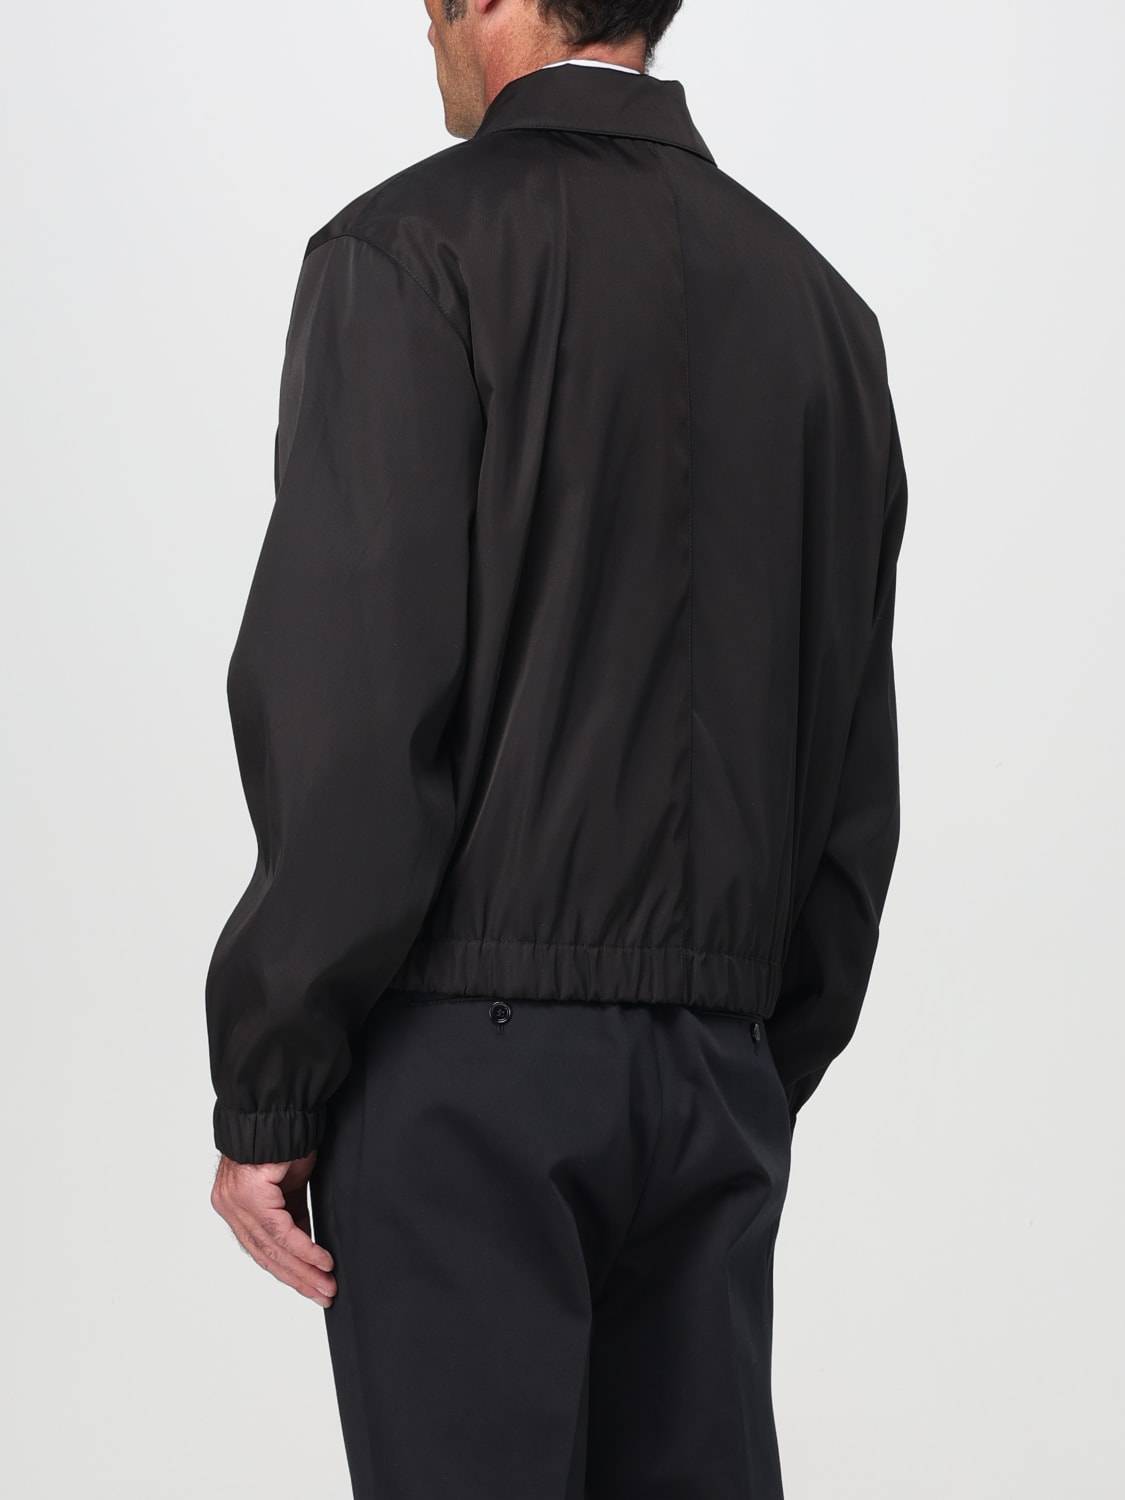 AMI PARIS: Jacket men - Black | AMI PARIS jacket HJK014PA0007 online at ...